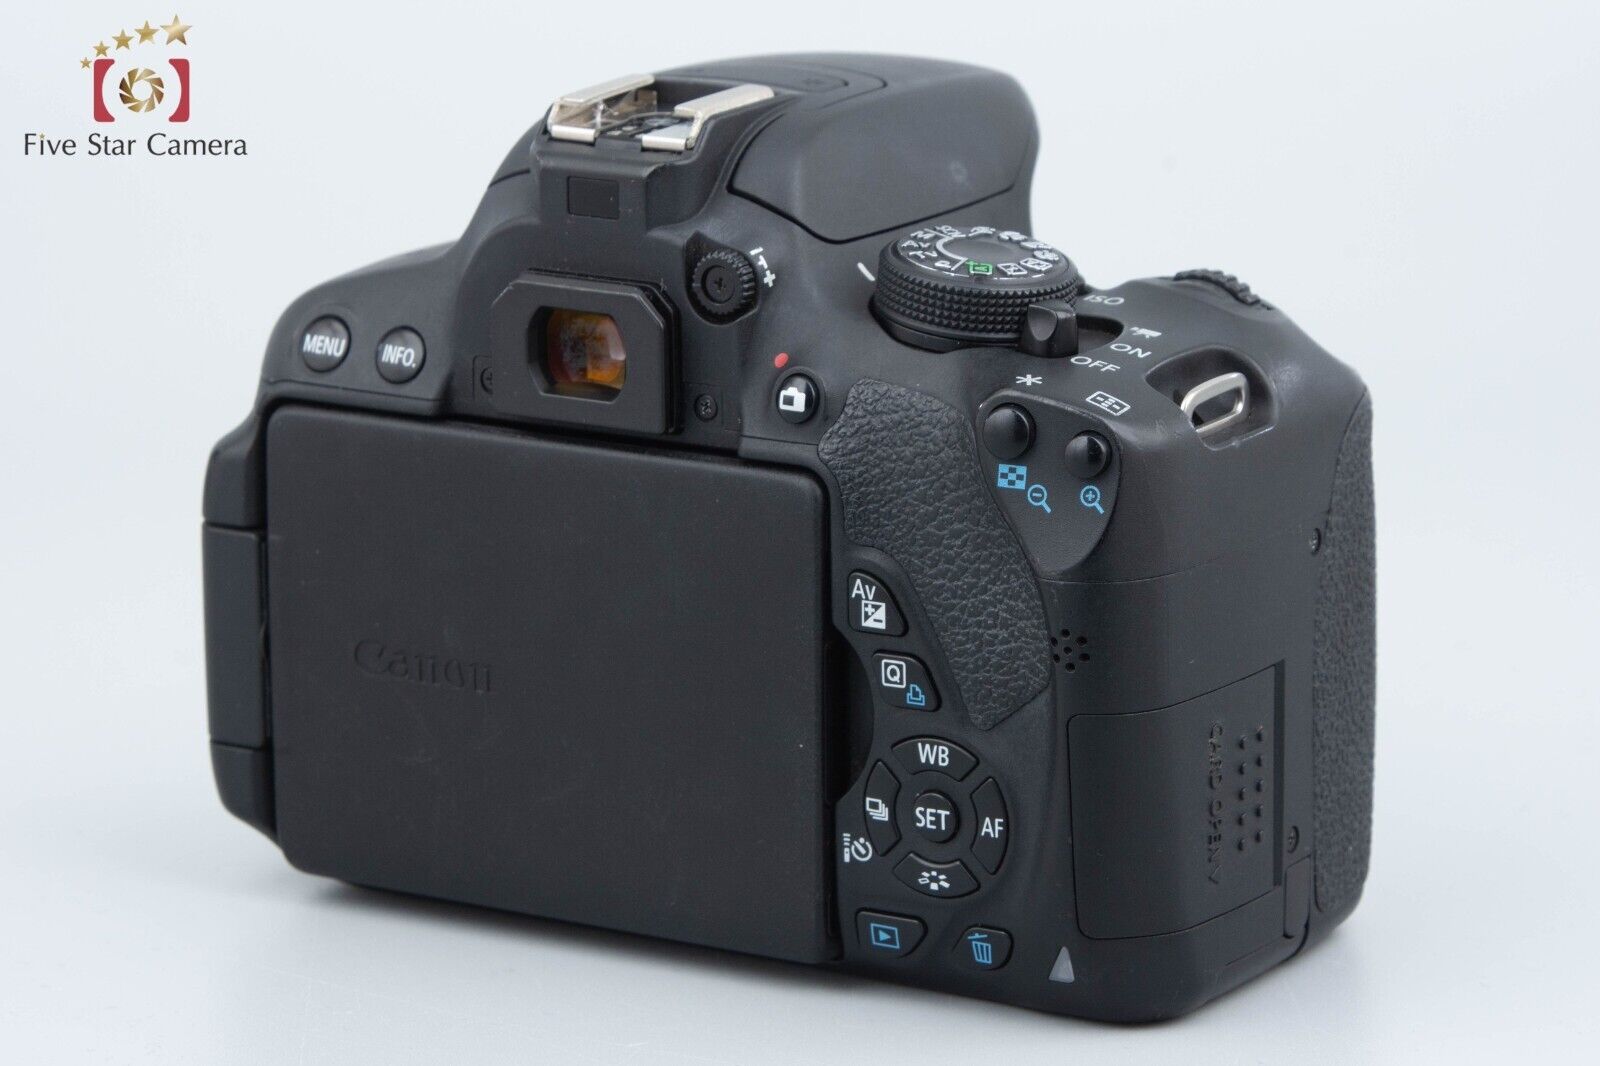 Canon EOS Kiss X7i / Rebal T5i / 700D 18.0 MP DSLR Camera Body